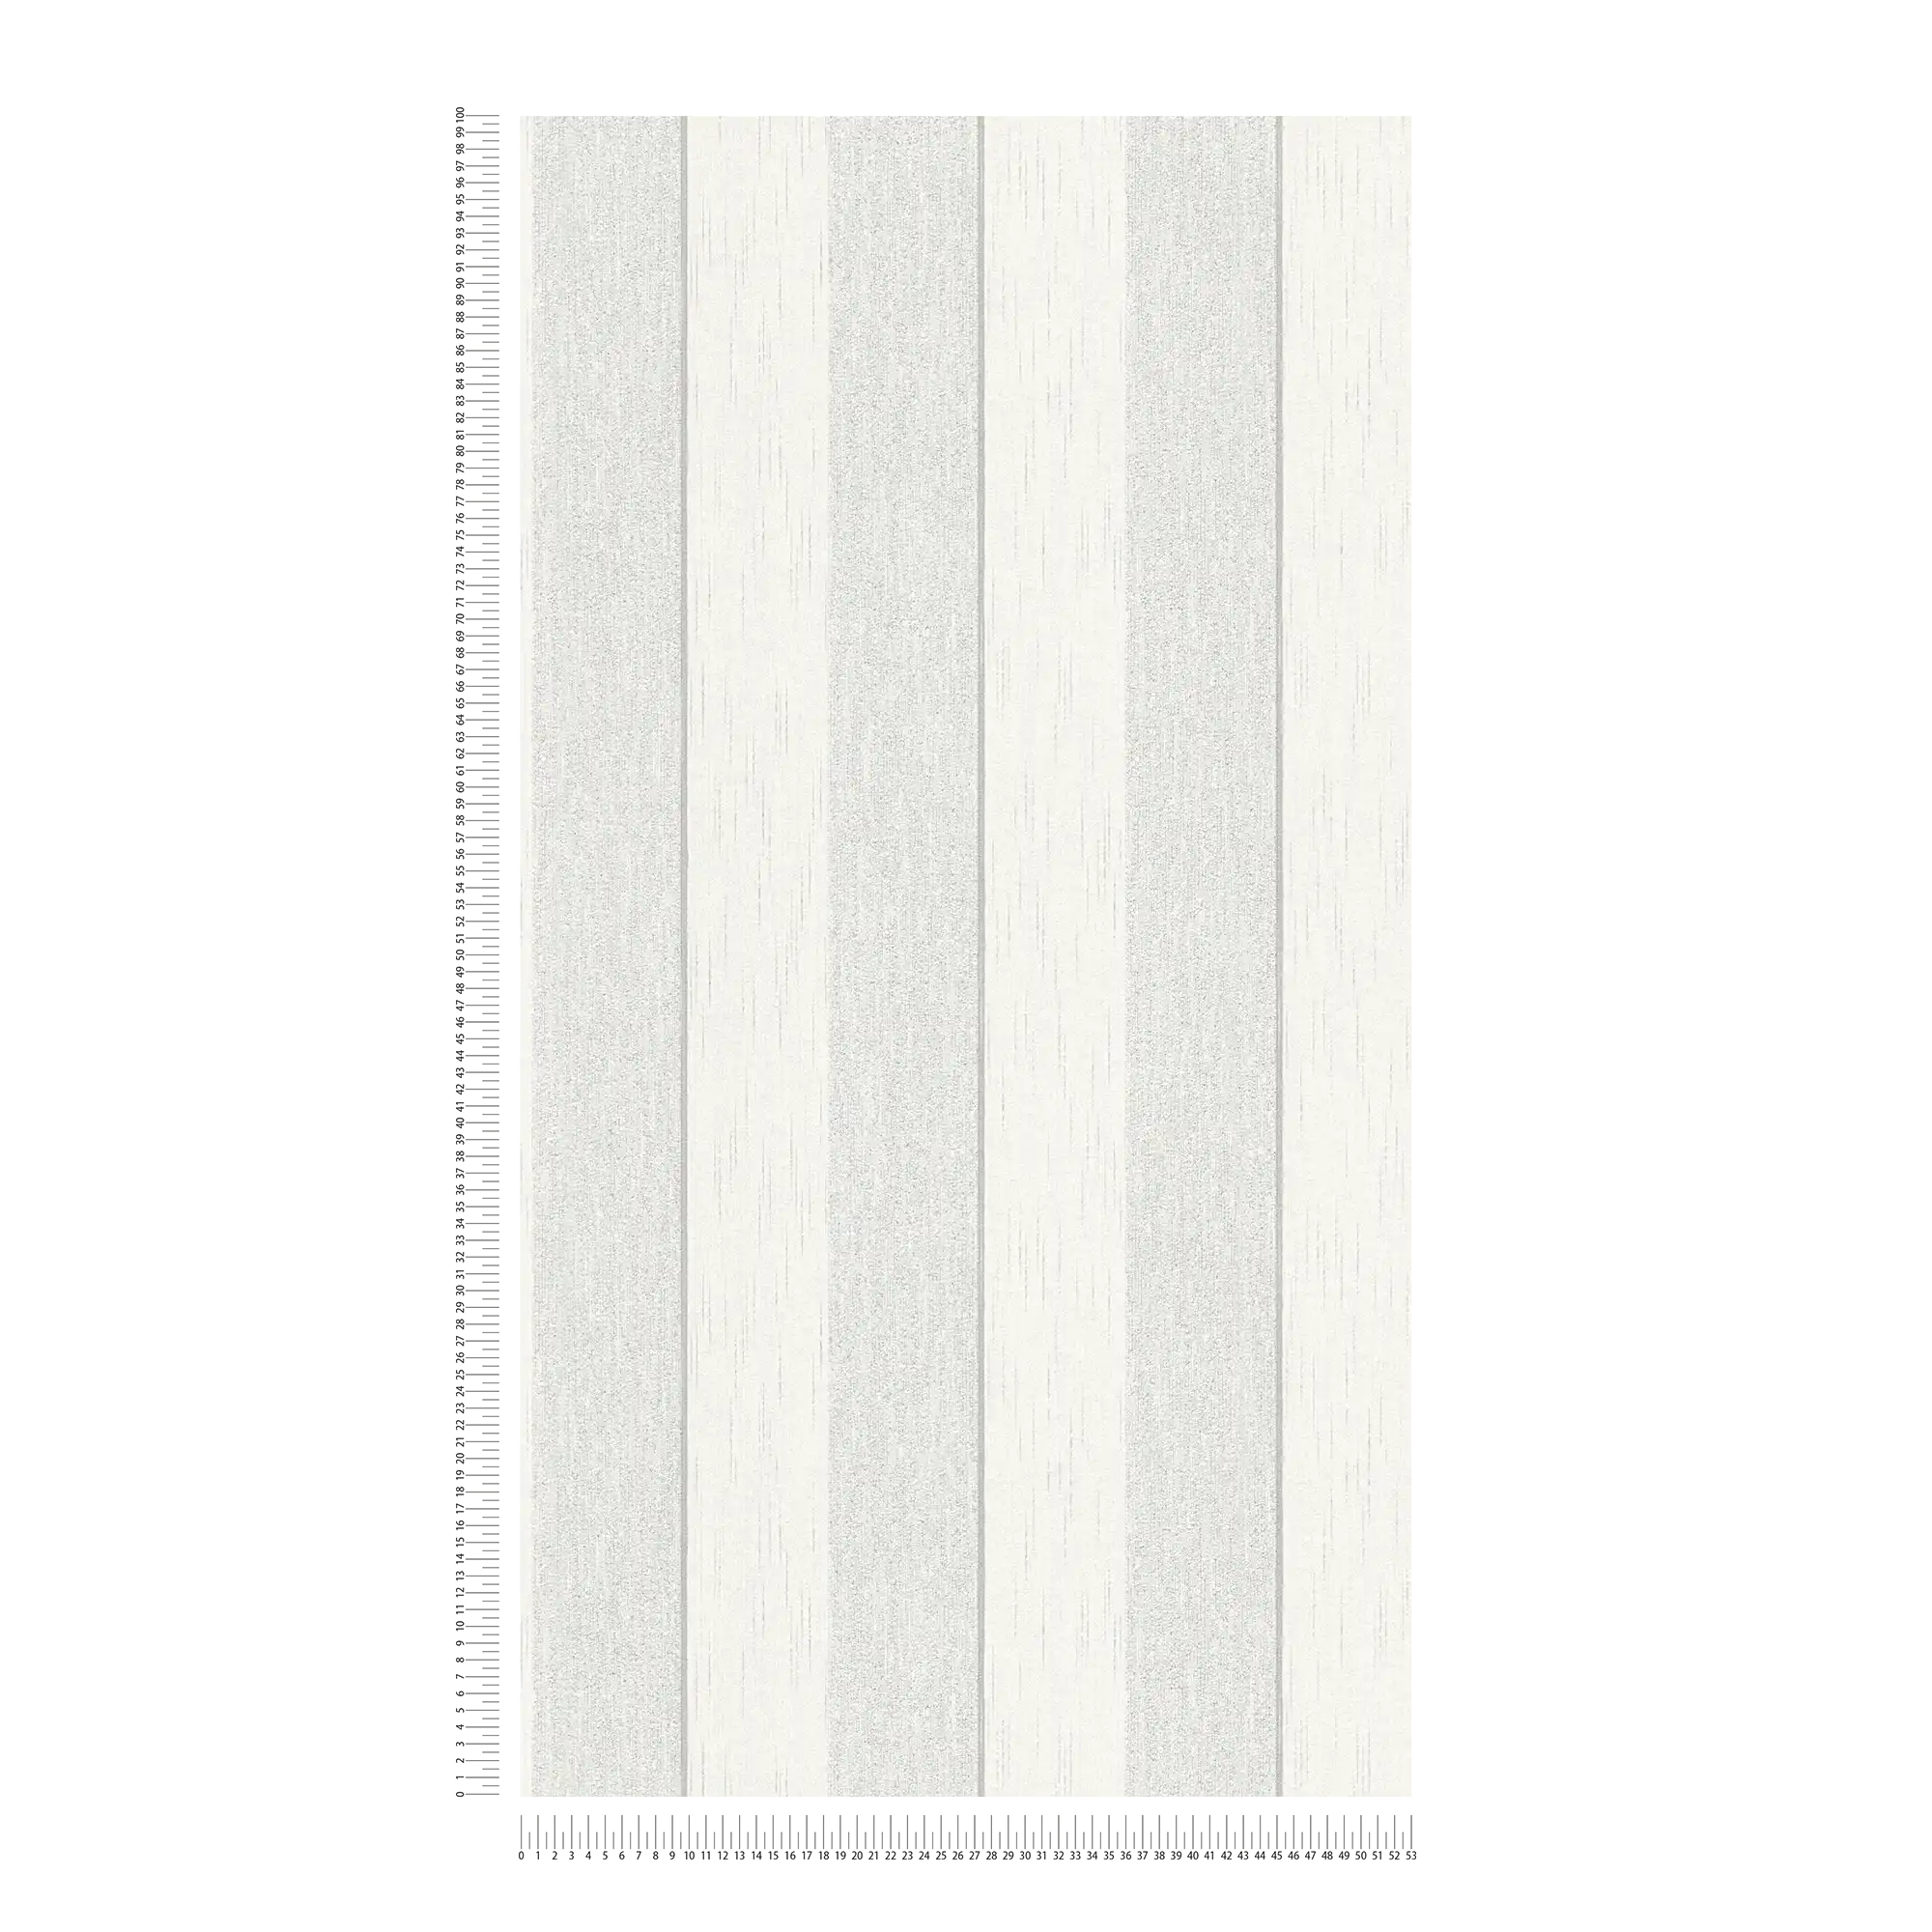             Carta da parati effetto texture a strisce screziate - grigio, bianco
        